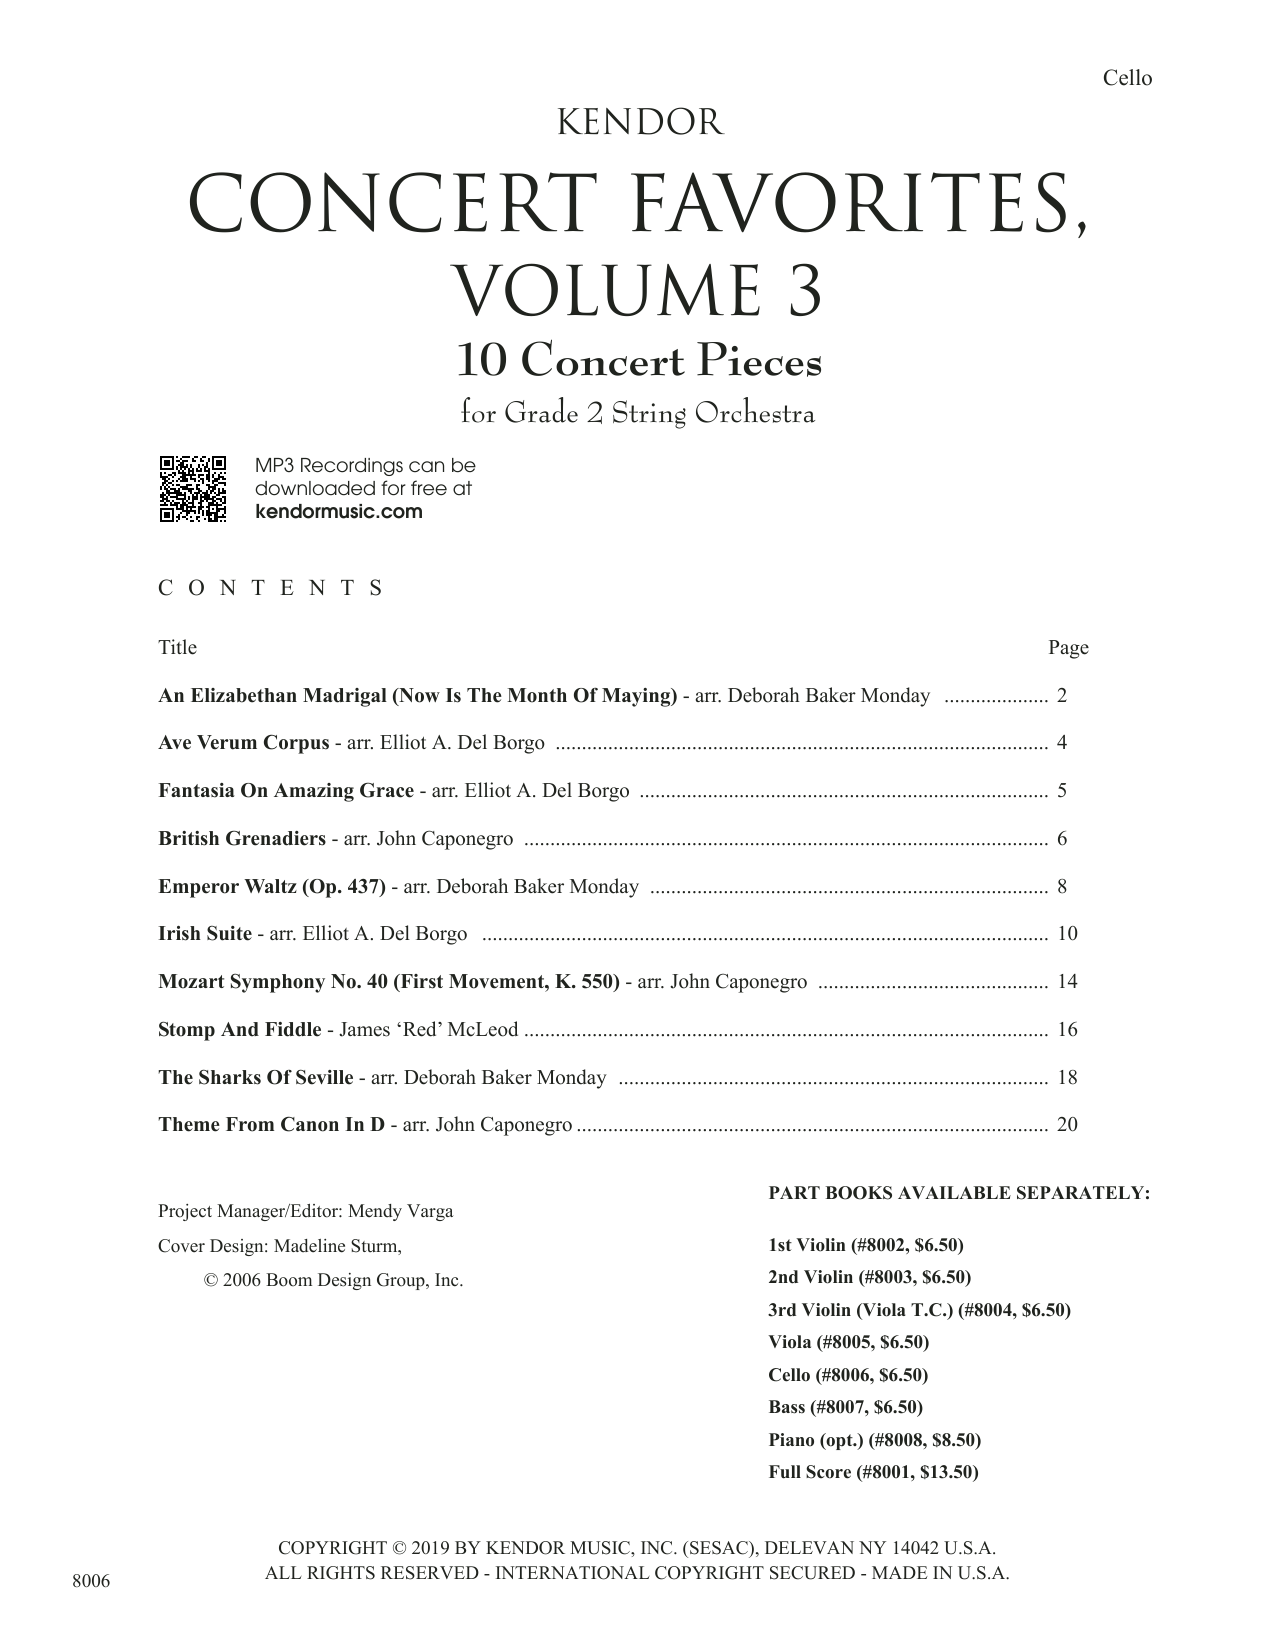 Download Various Kendor Concert Favorites, Volume 3 - Ce Sheet Music